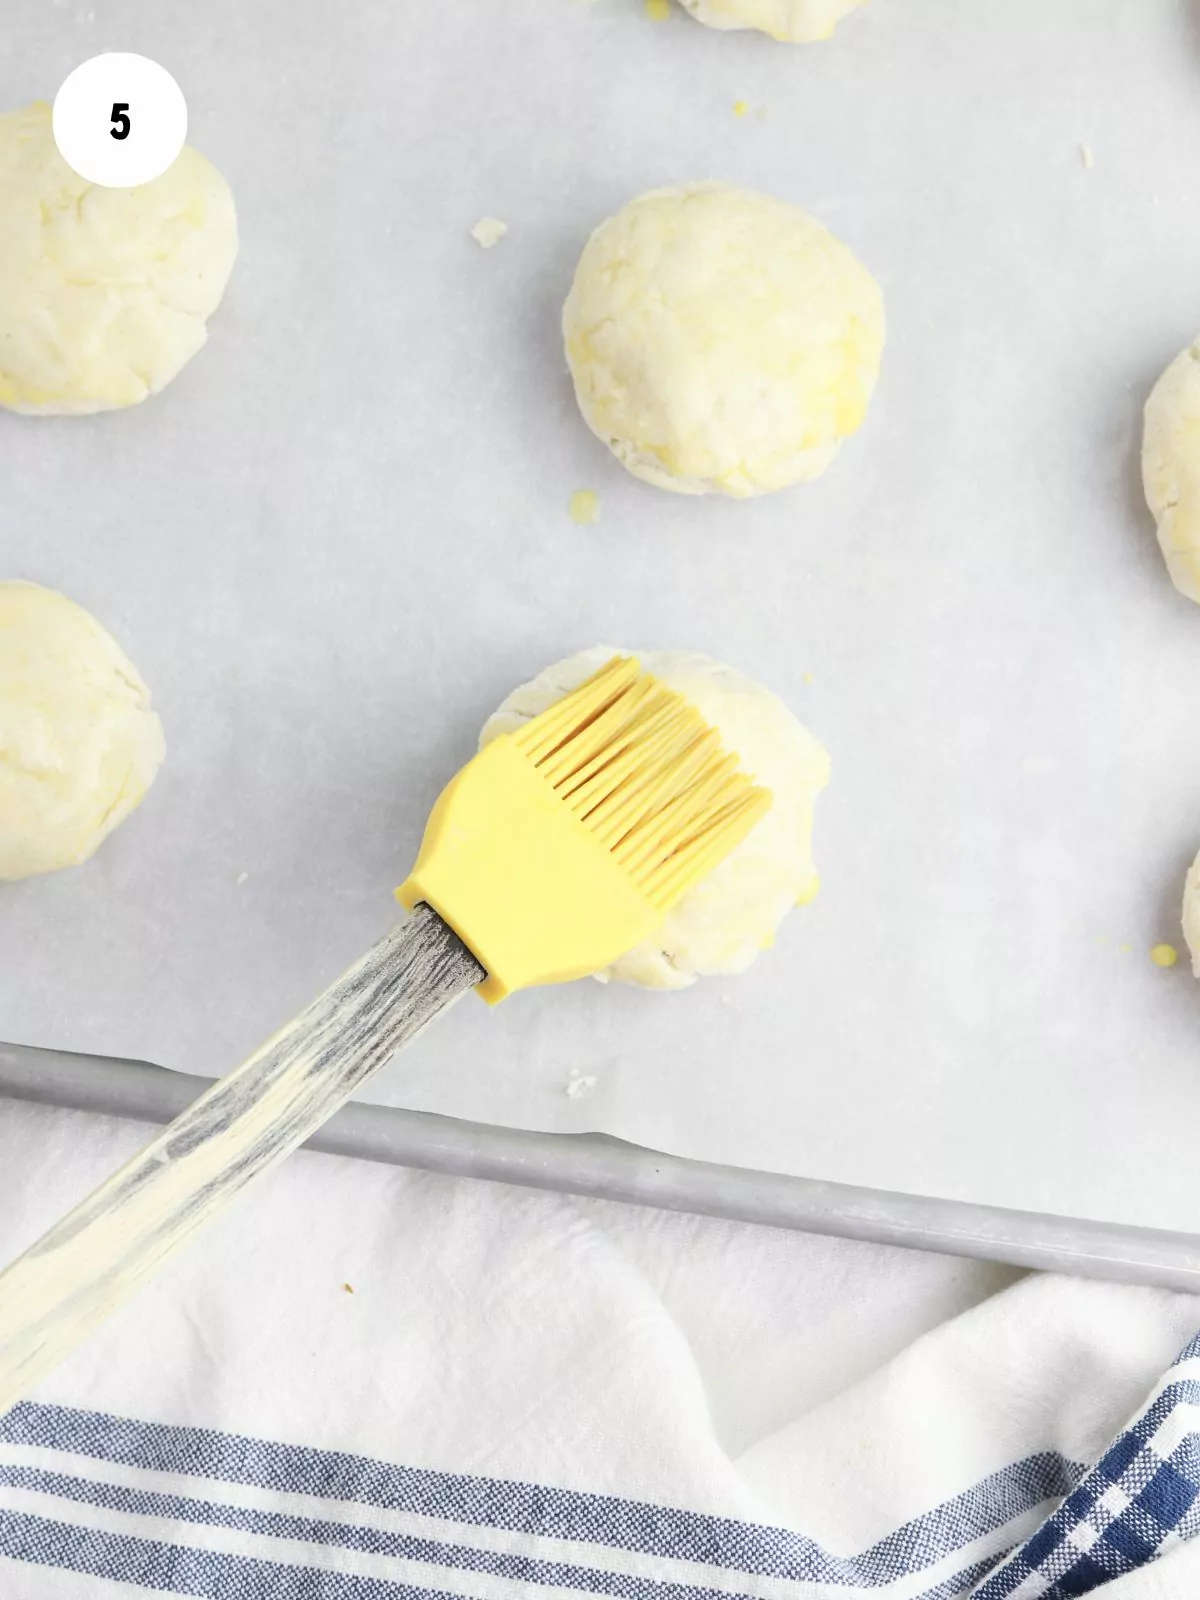 Yellow pastry brush painting egg wash onto dough balls